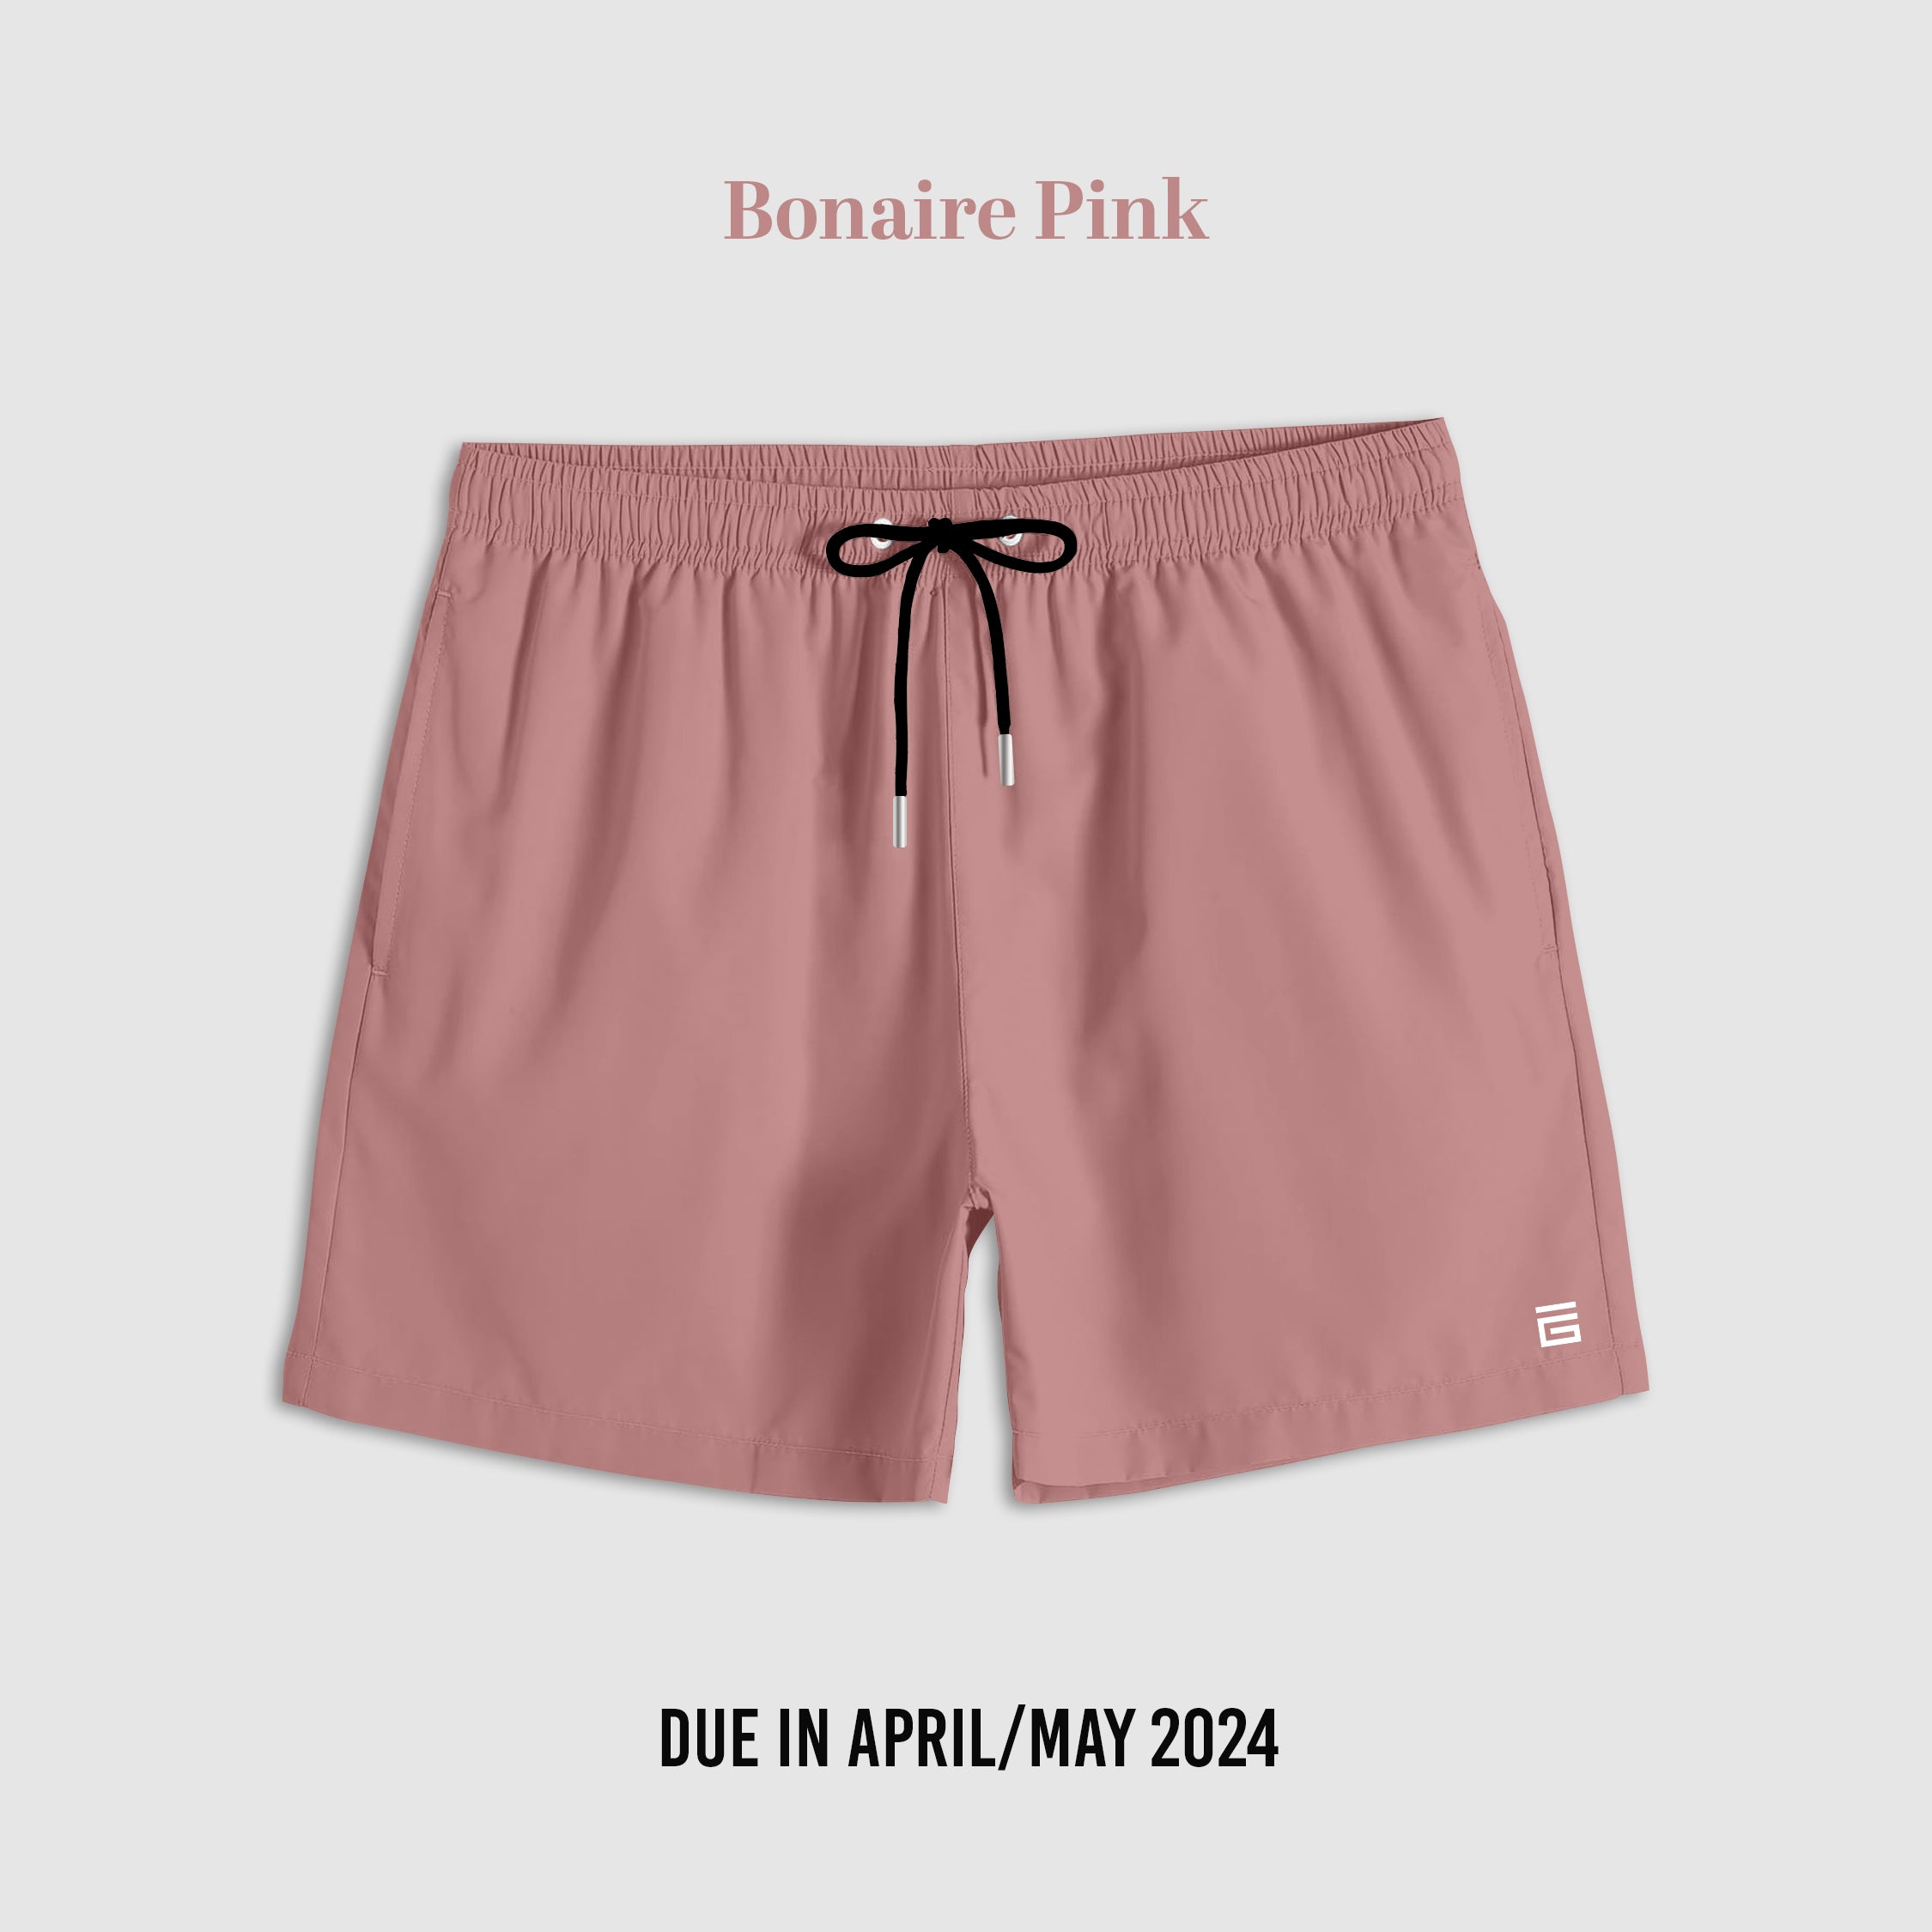 bonaire-pink.jpg